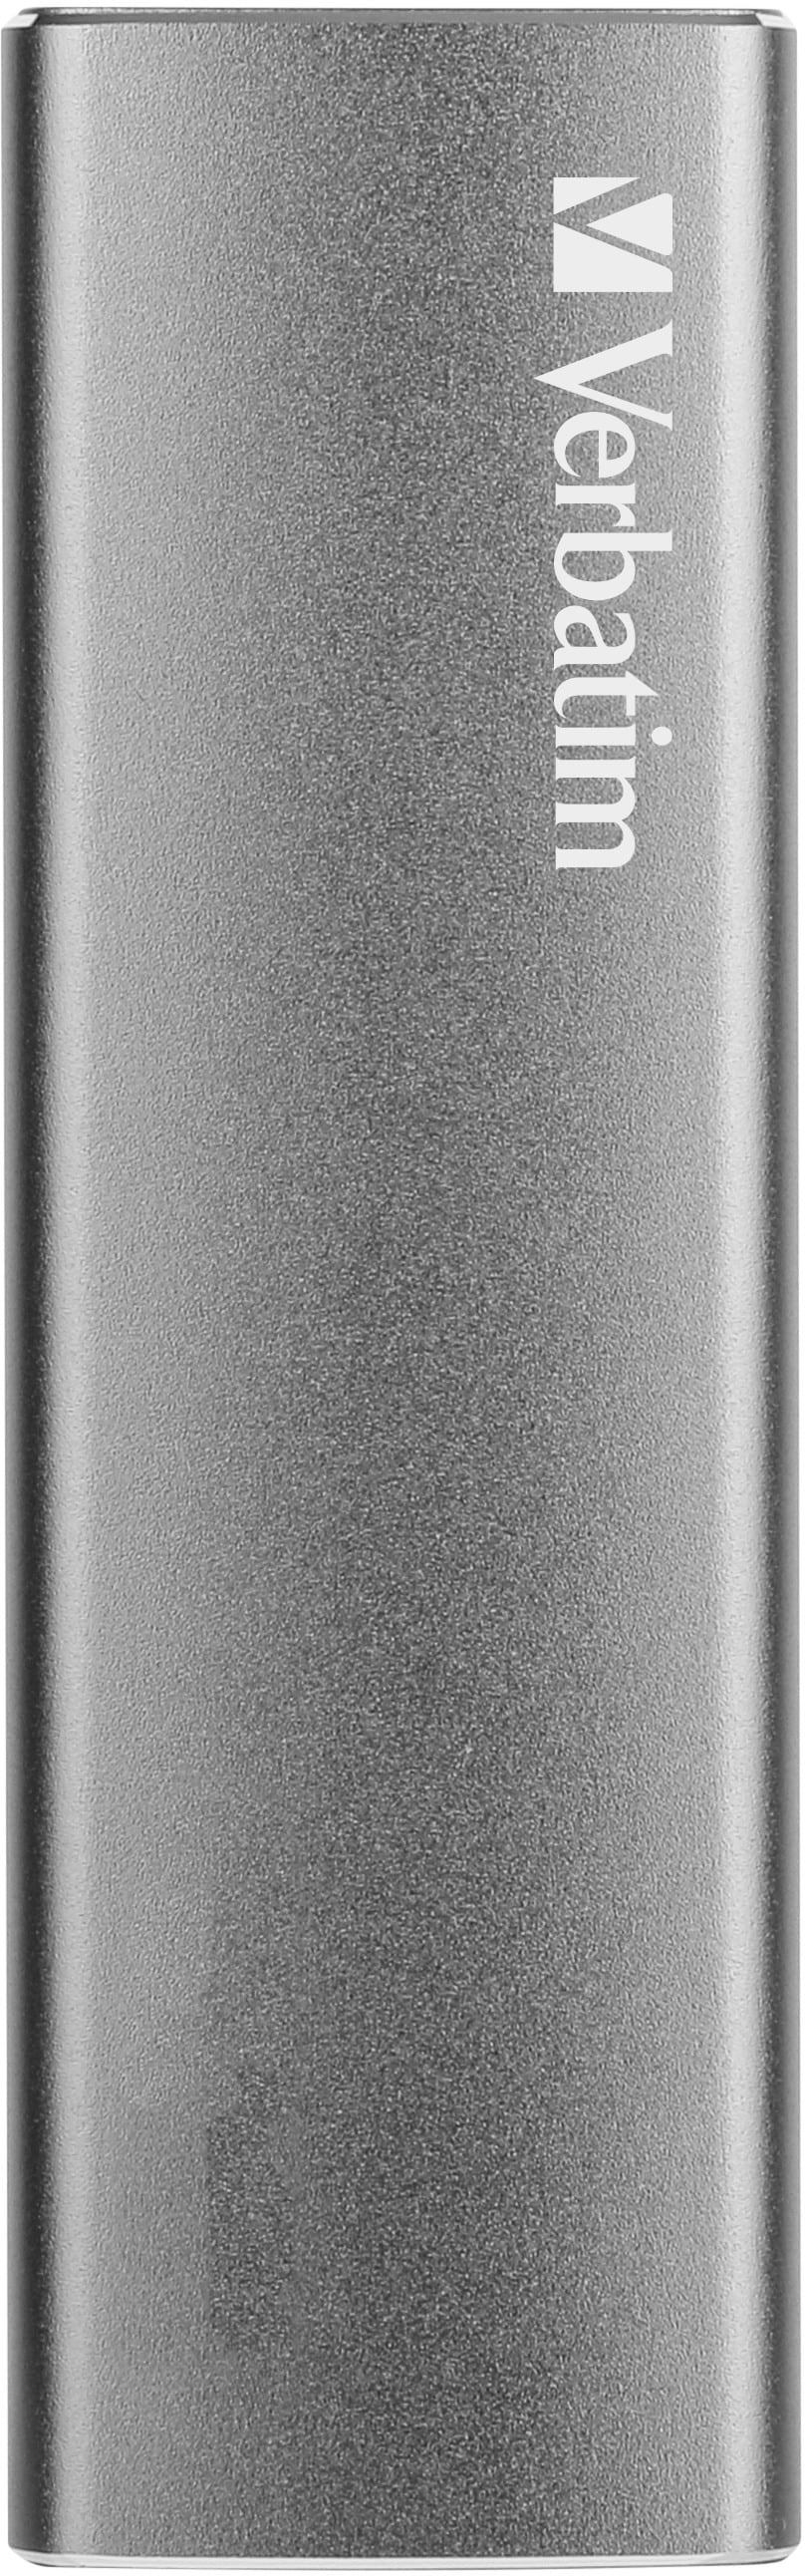 Verbatim Vx500 (480 GB), Externe SSD, Grau